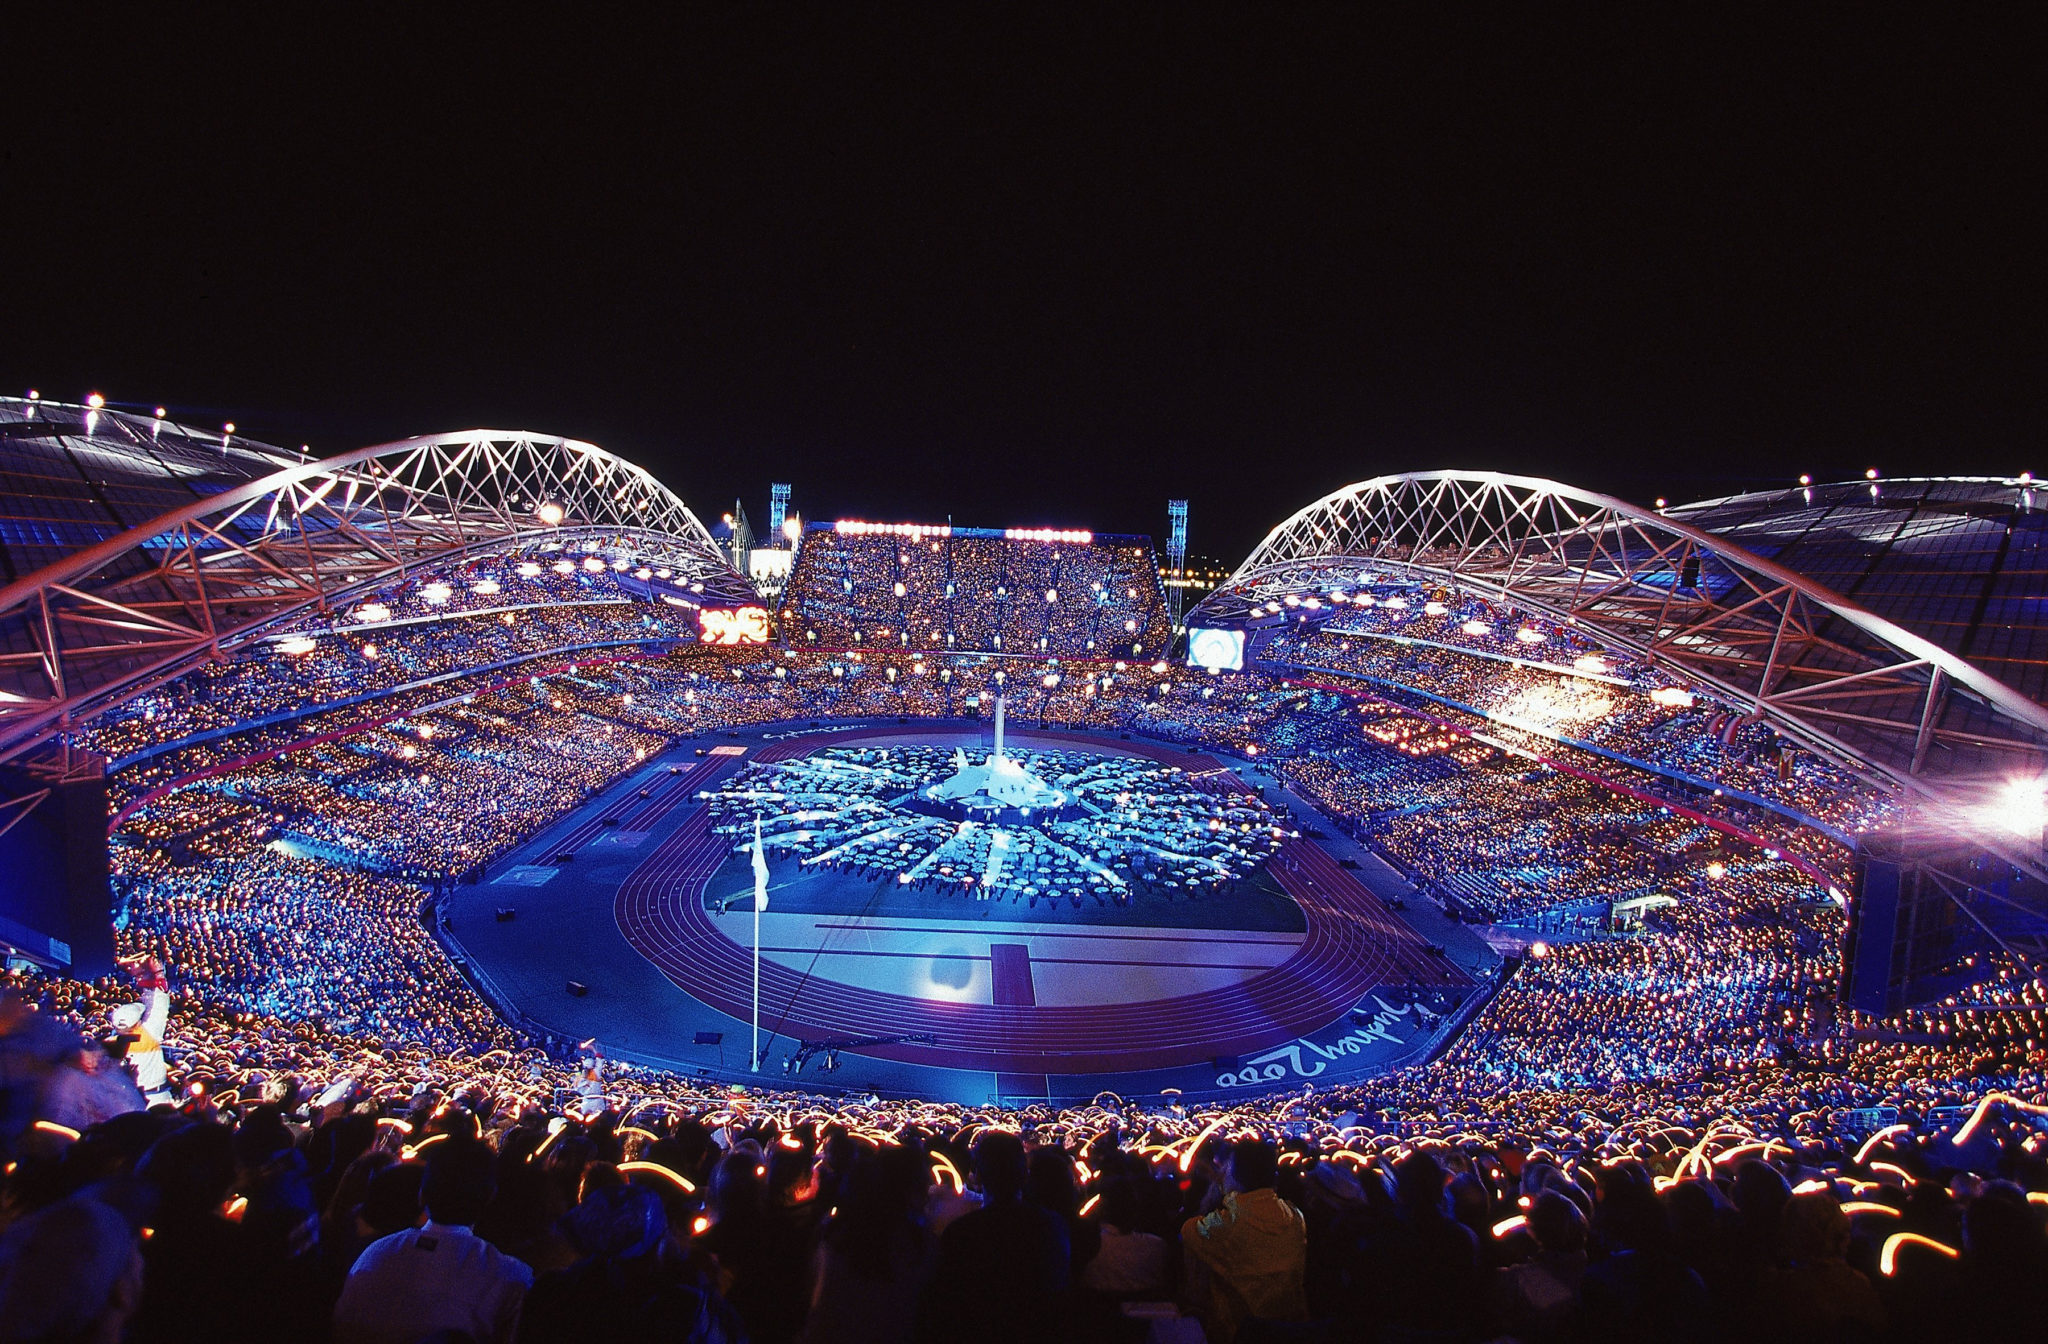 Year stadia. Олимпийский стадион Австралия. Олимпийские игры в Сиднее 2000. Стадион Австралия Сидней.